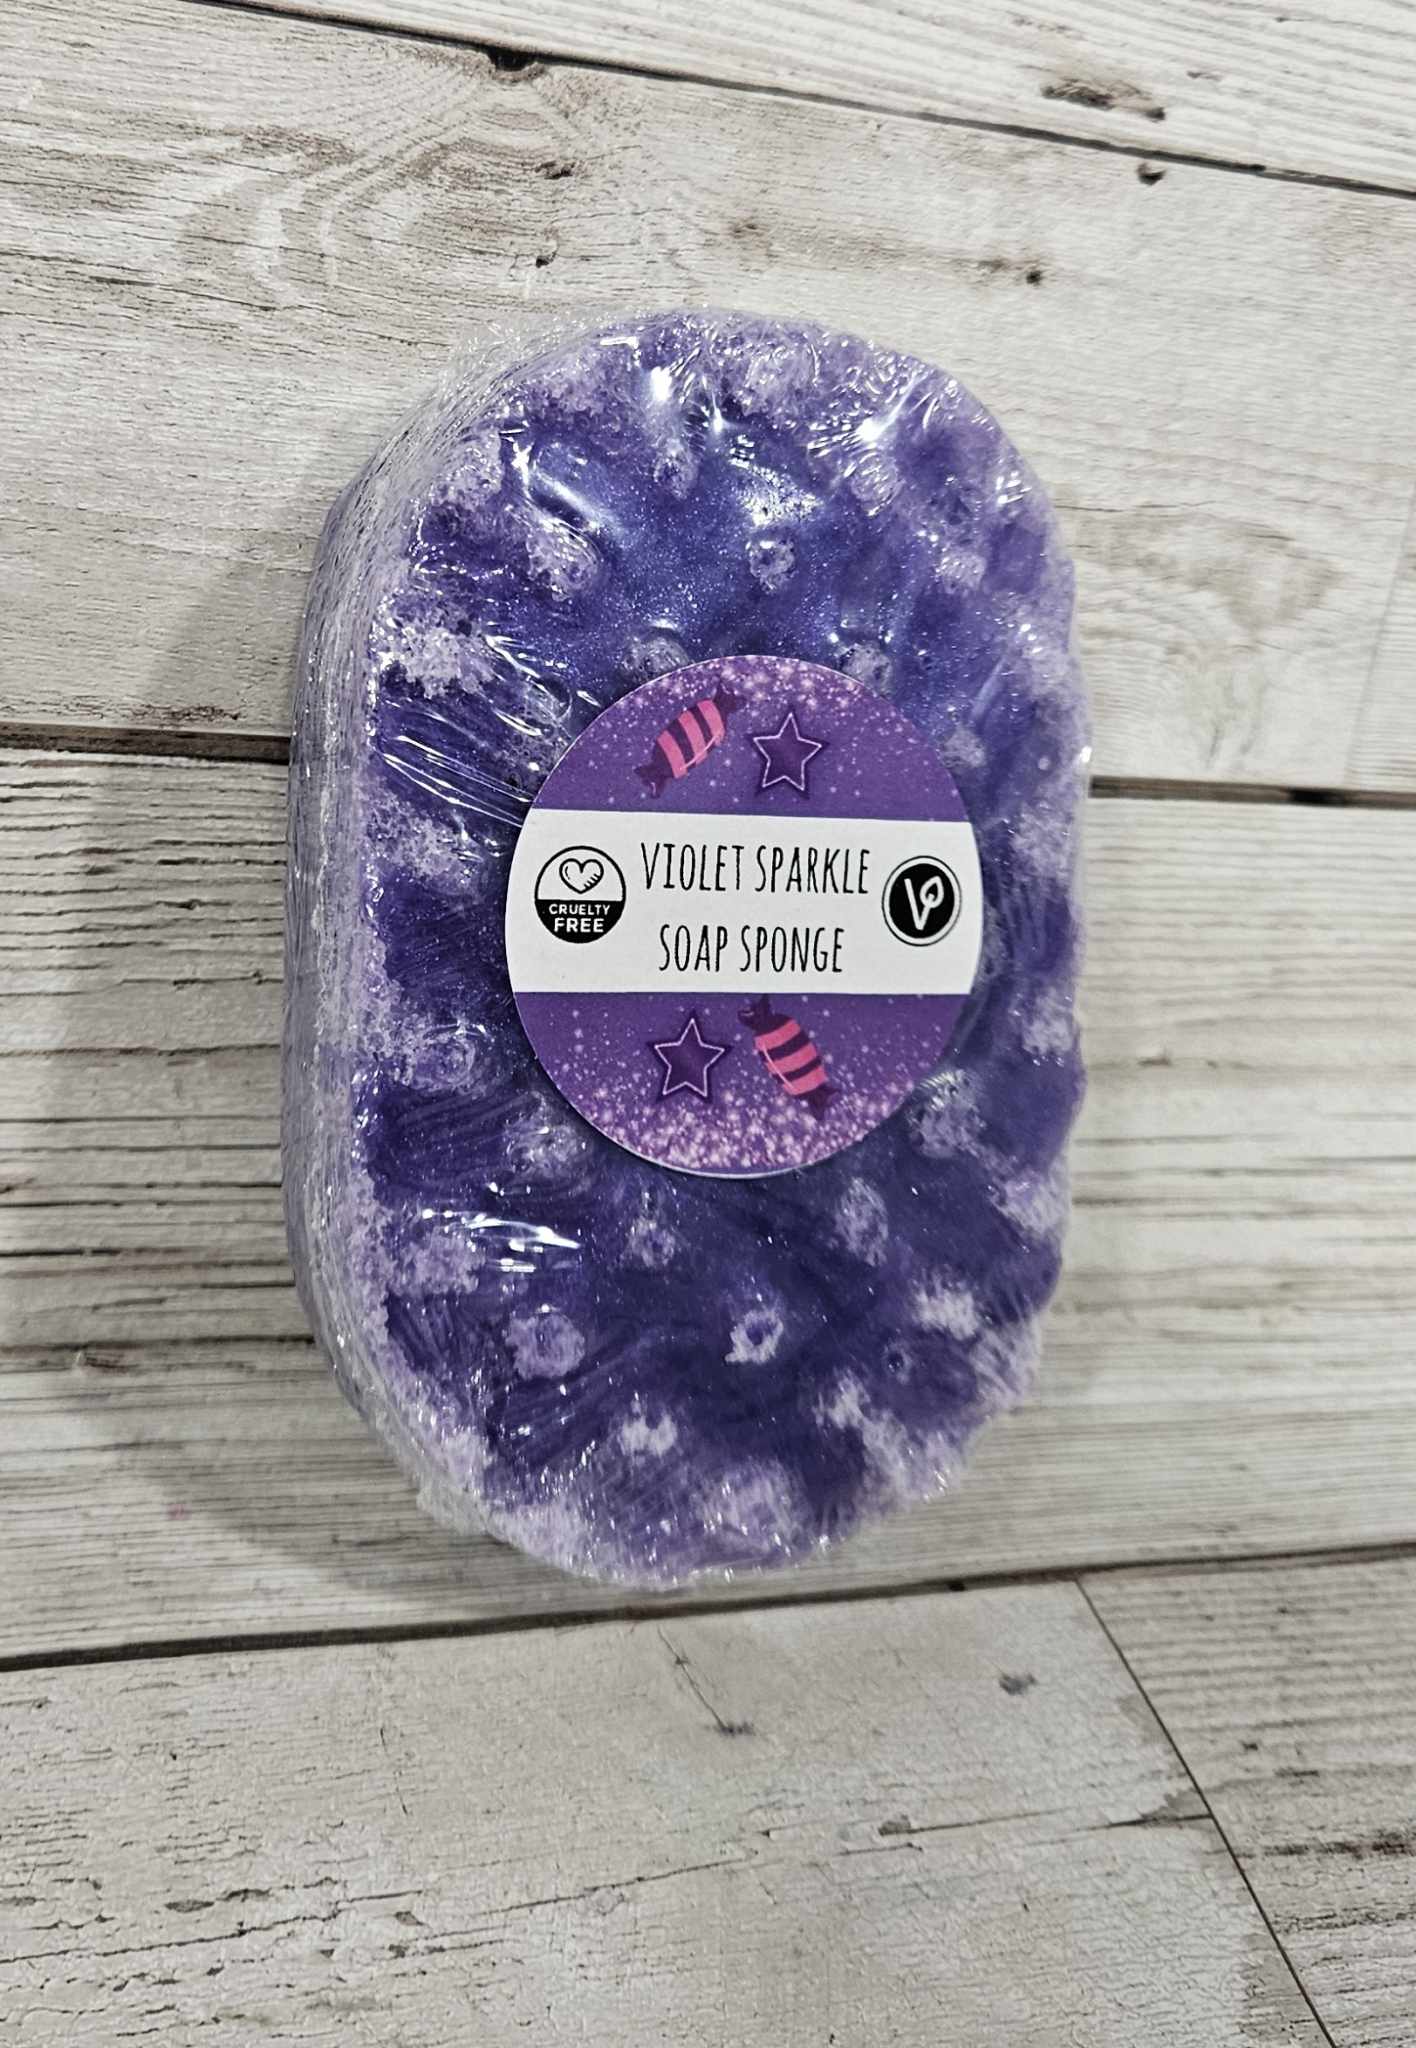 'Violet Sparkle' Exfoliating Soap Sponge